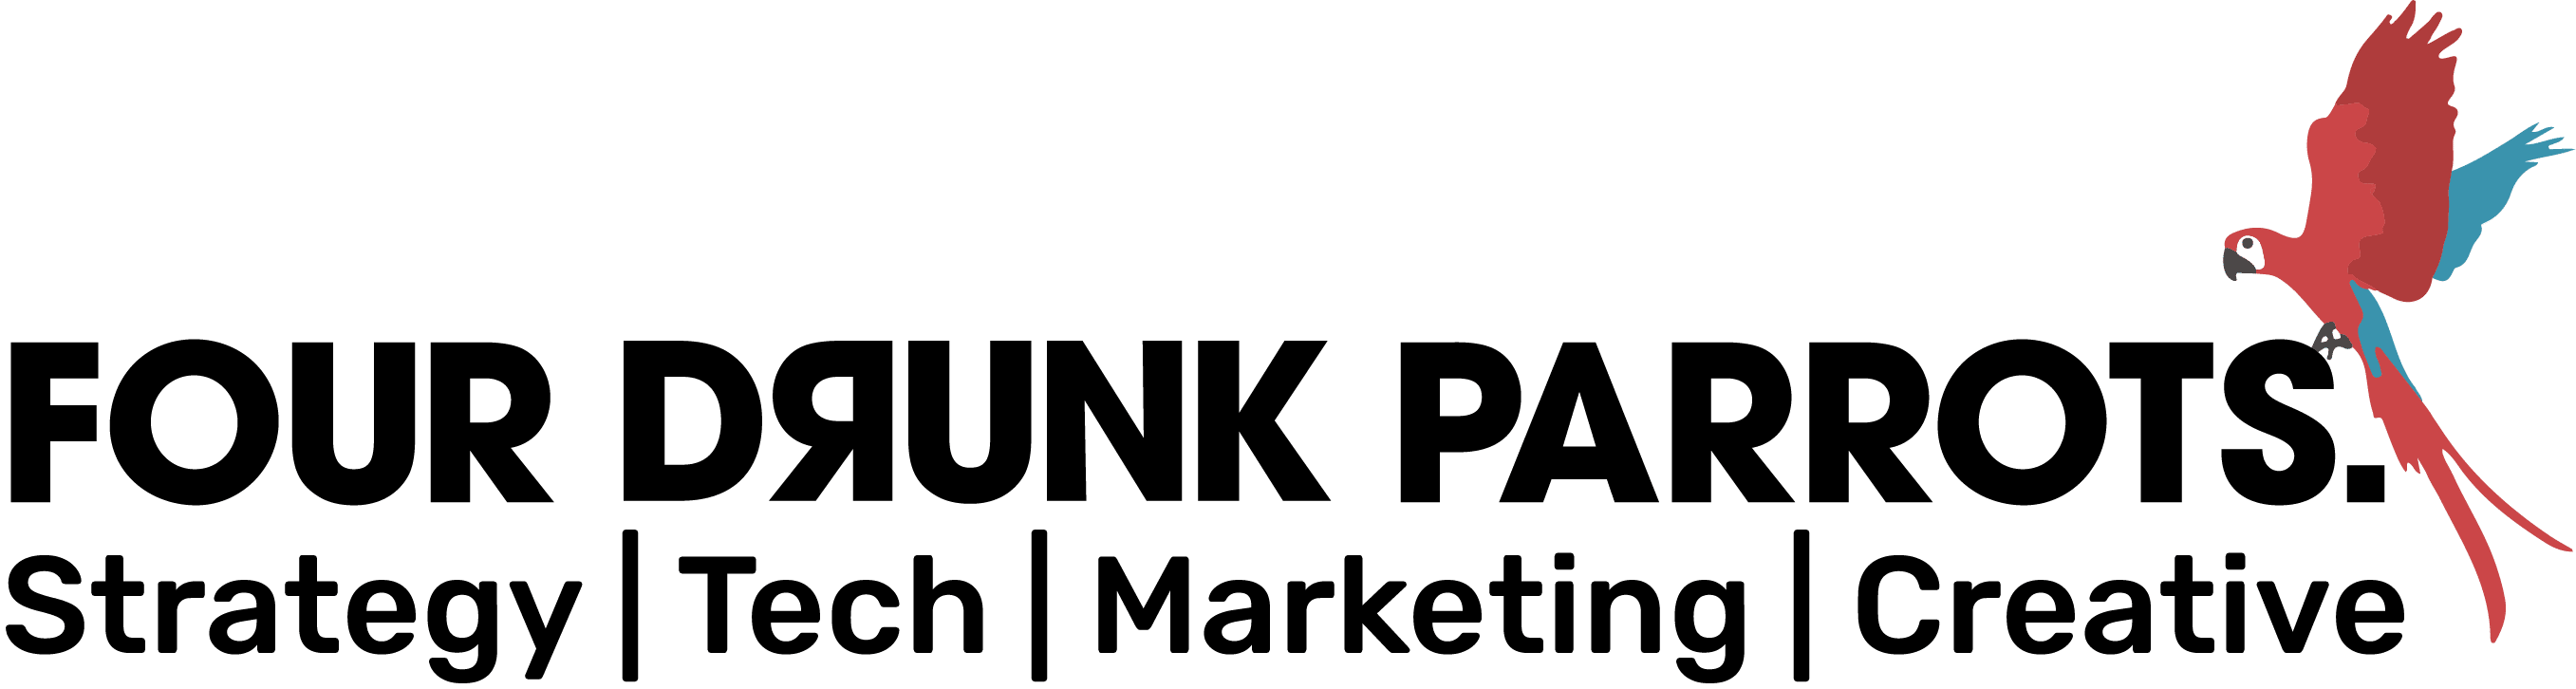 Four Drunk Parrots - Strategy - Tech - Marketing - Creative - Marketing agency